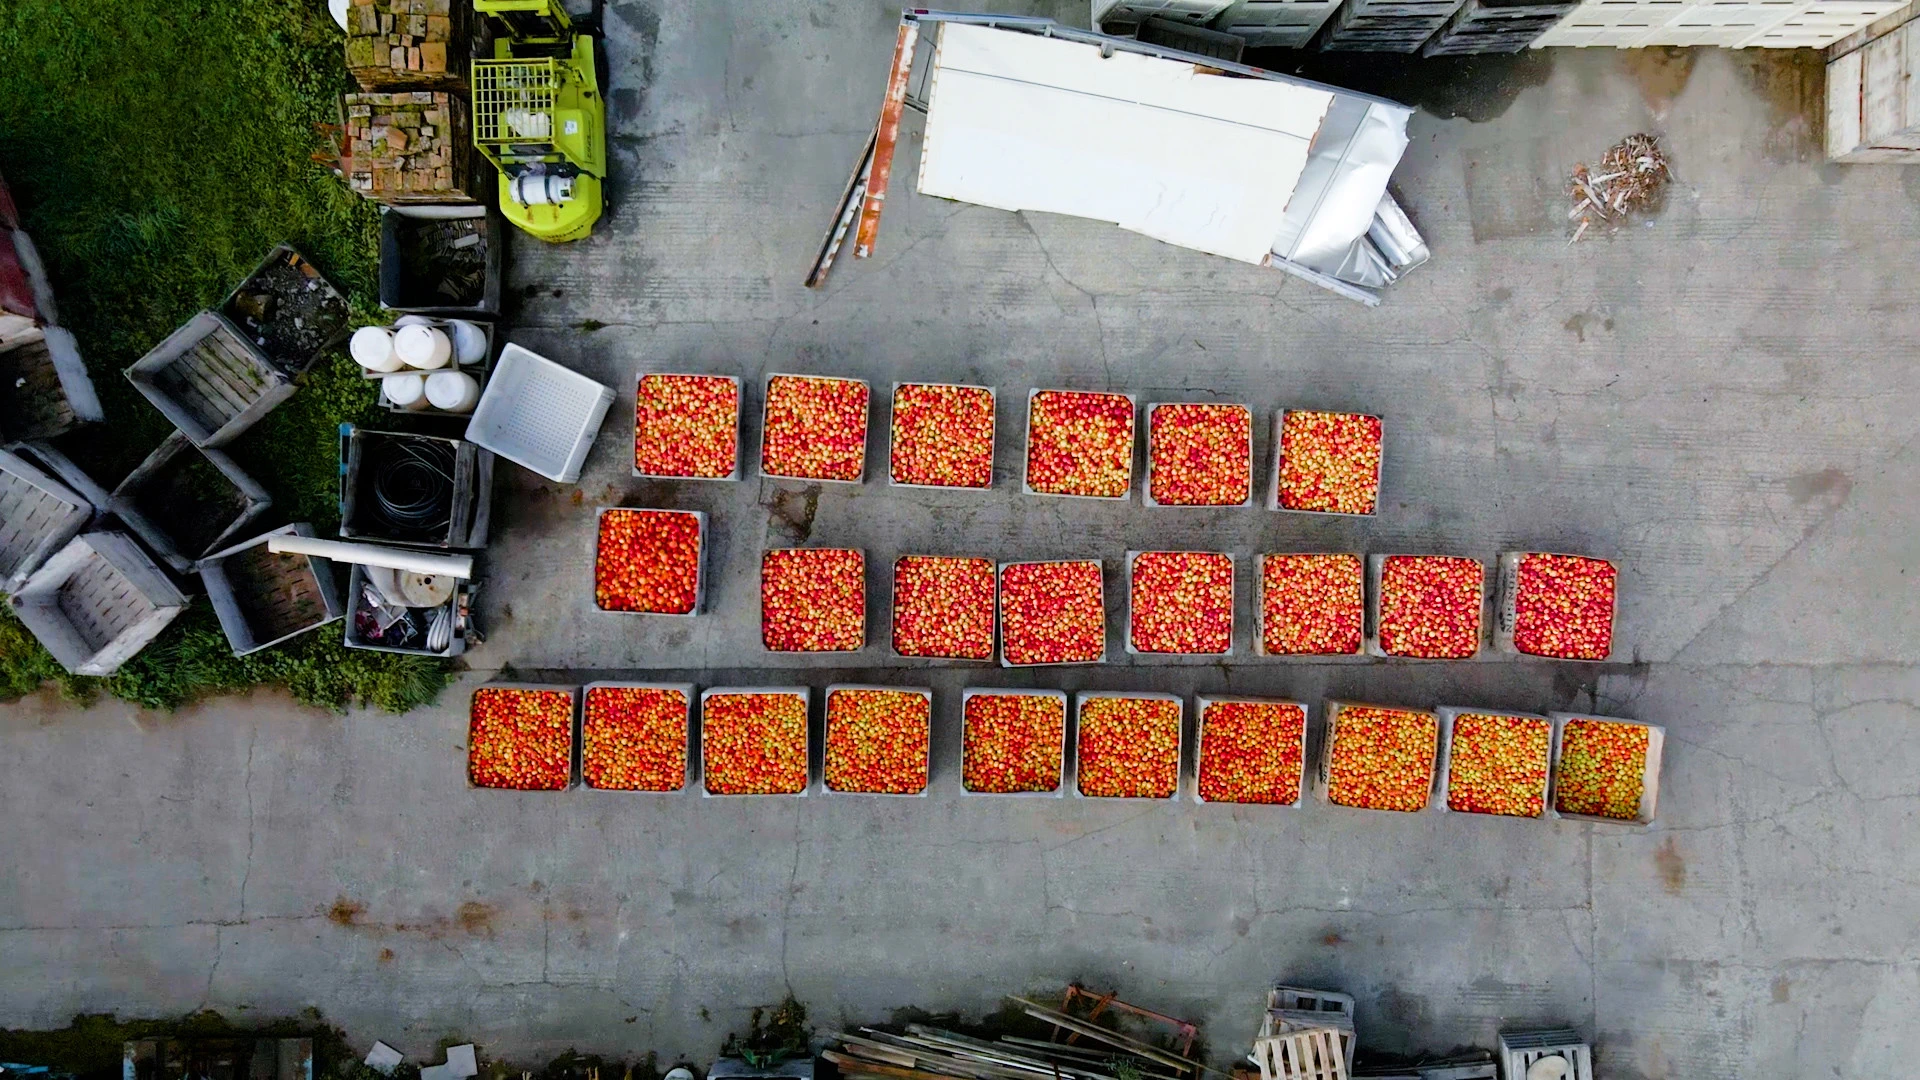 Drone shot of apple bins full of apples